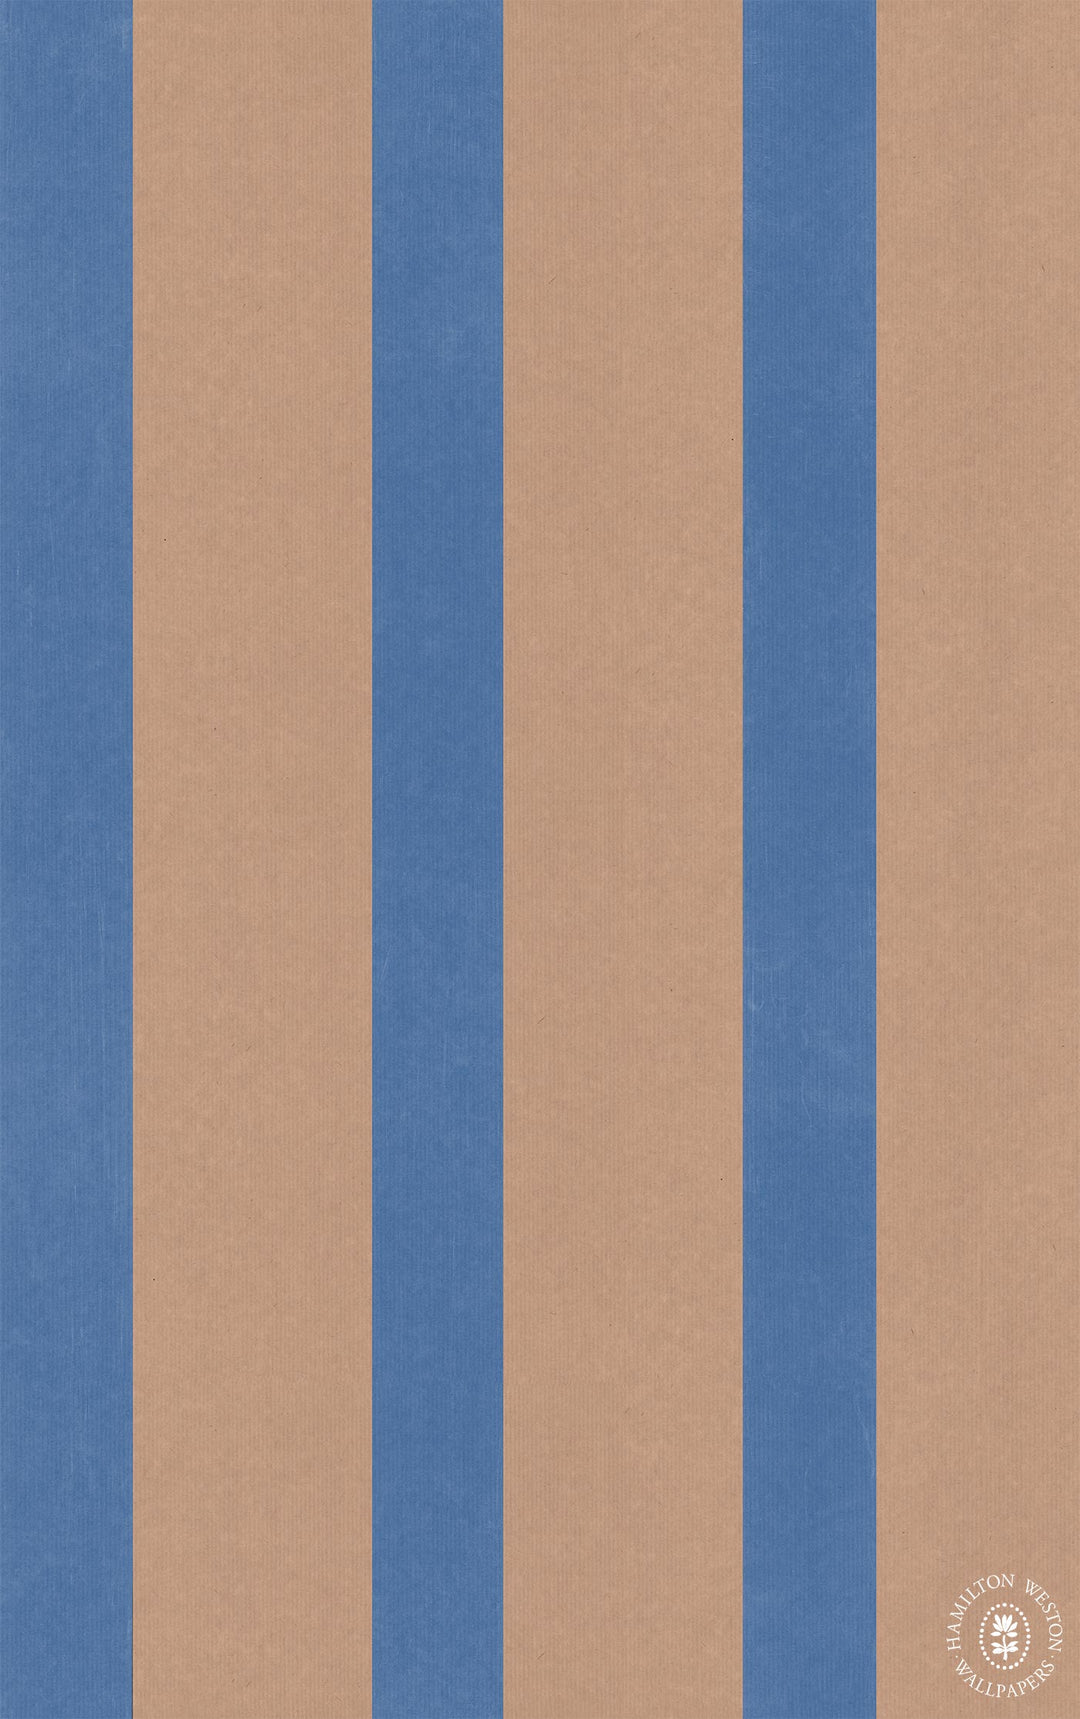 Hamilton-weston-wallpaper-Adam-Bray-designs-brown-paper-stripes-wallpaper-coloured-paint-on-brown-manilla-base-paper-understated-stripe-chic-60's-70's-inspired-British-designen-printed-Blue-01